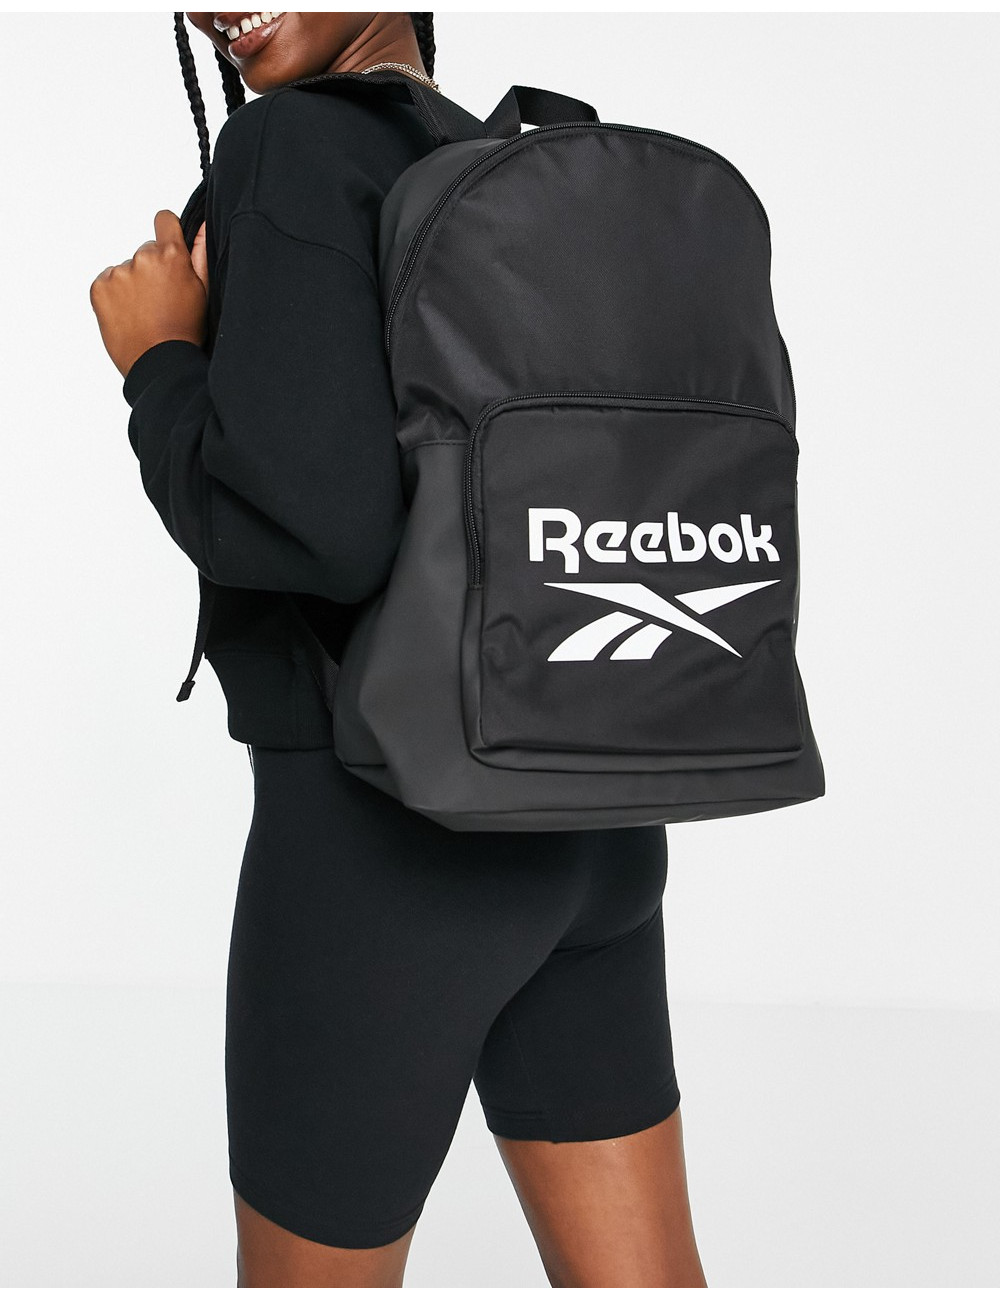 Reebok large logo backpack...